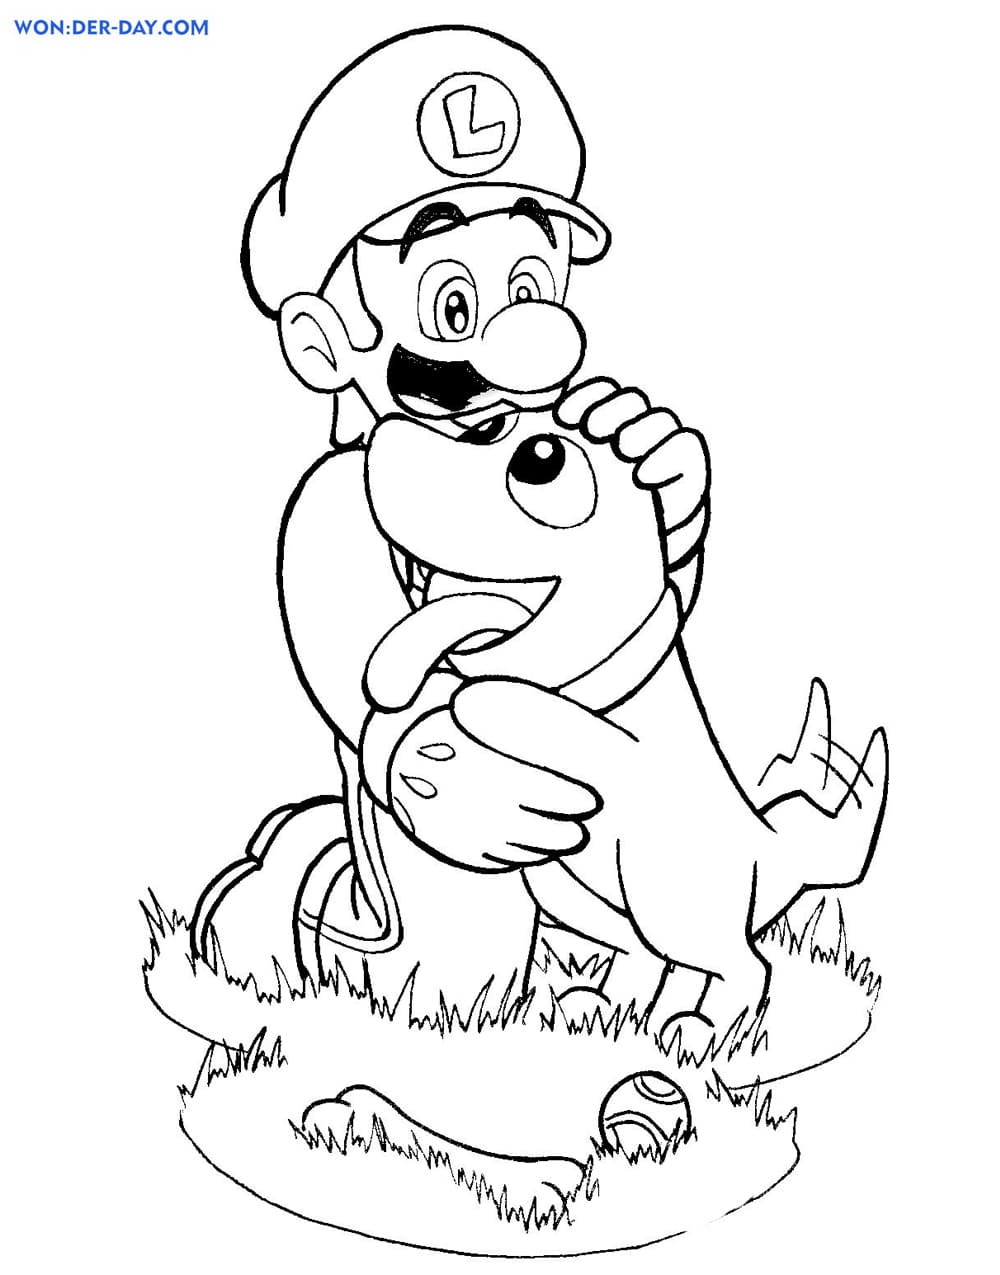 Luigi manison coloring pages